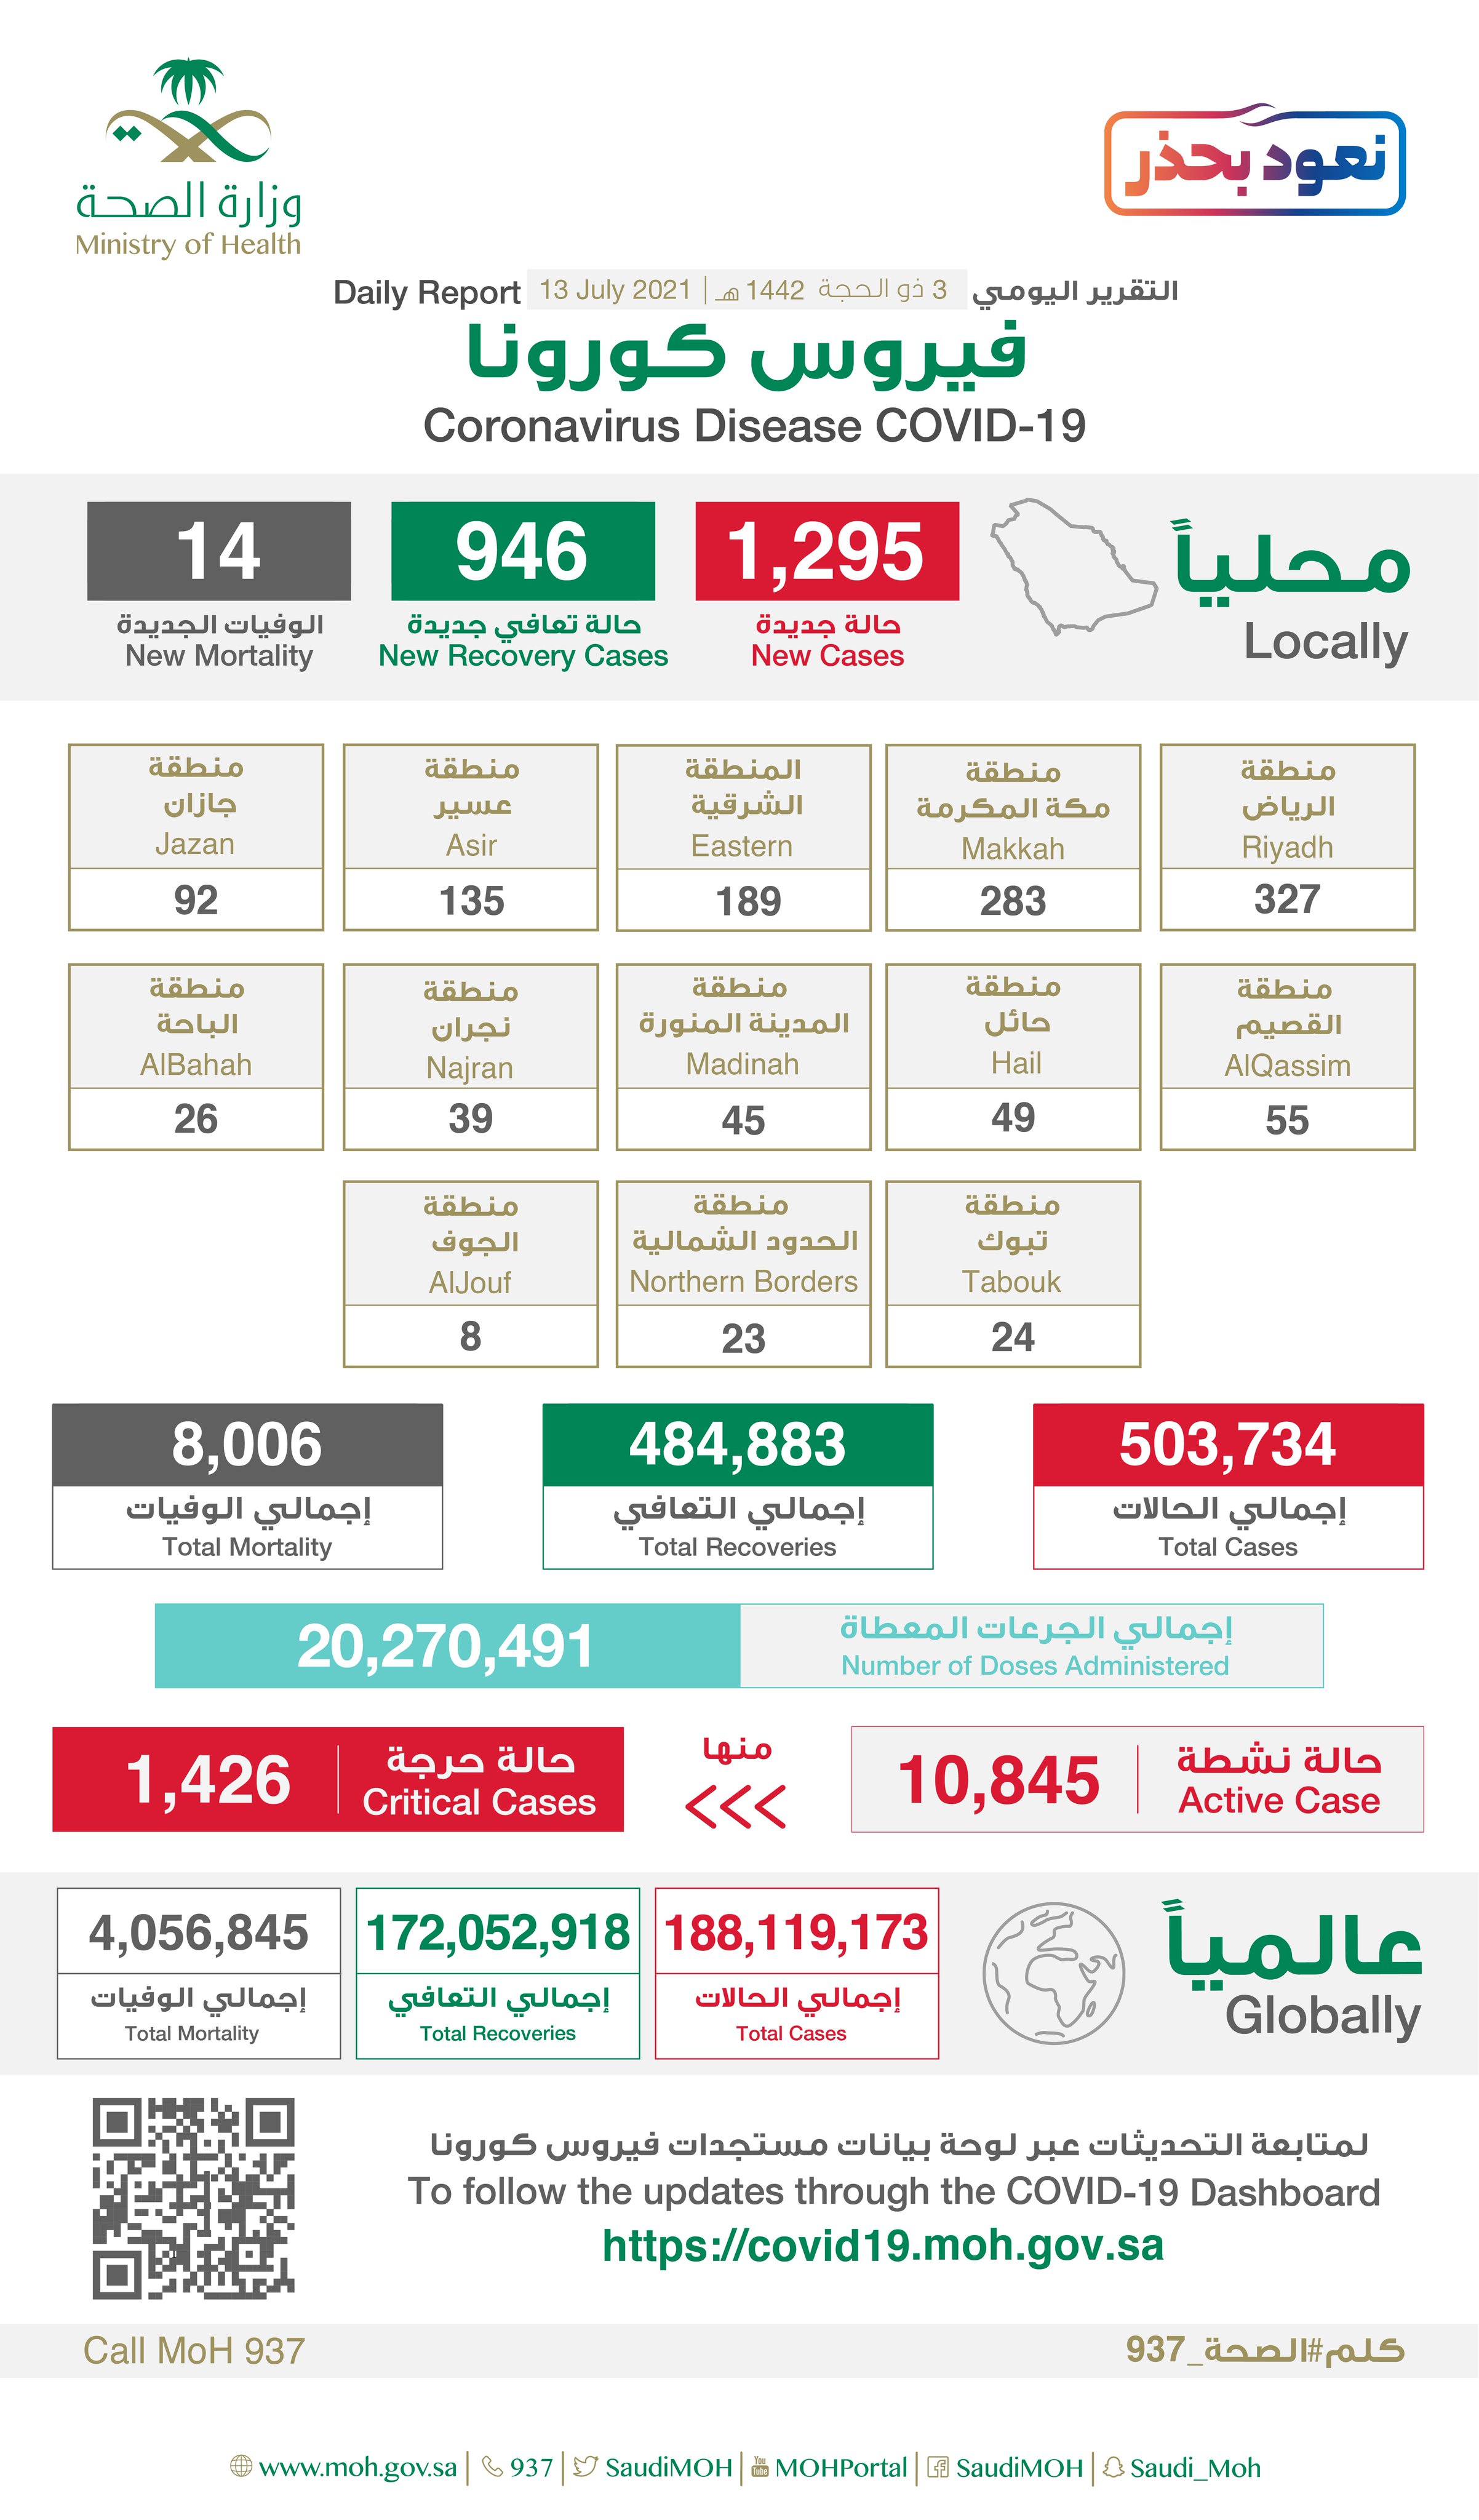 Saudi Arabia Coronavirus : Total Cases : 503,734 , New Cases :1,295, Cured : 484,883 , Deaths: 8,006 ,  Active Cases : 10,845